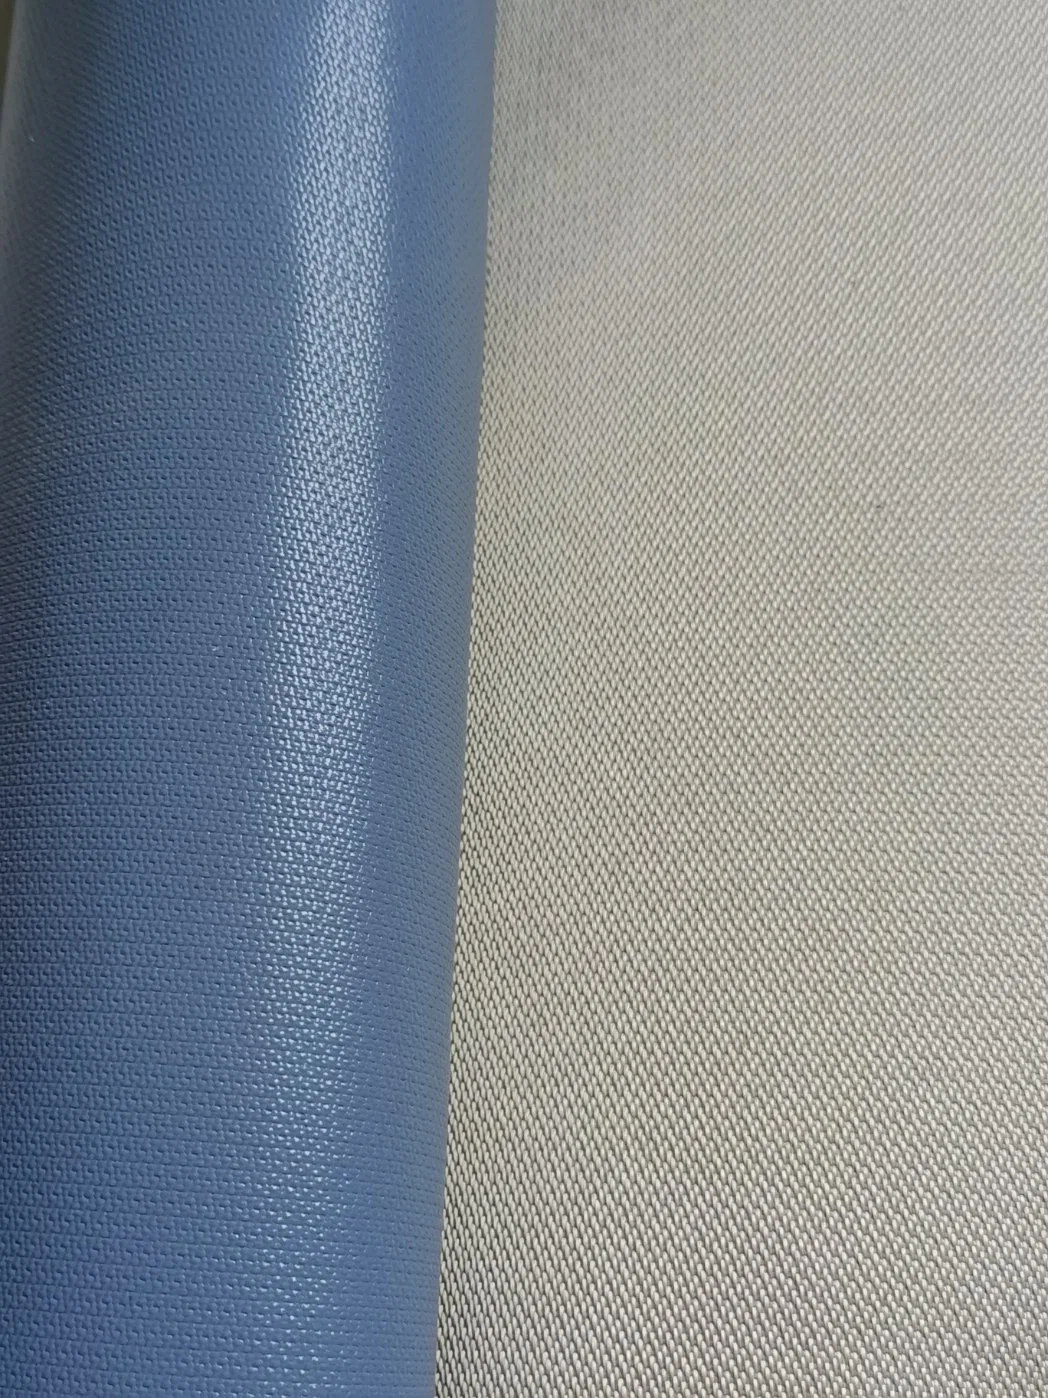 High Heat Resistance One Side PTFE Coated Fiberglass Fabric for Welding Blanket